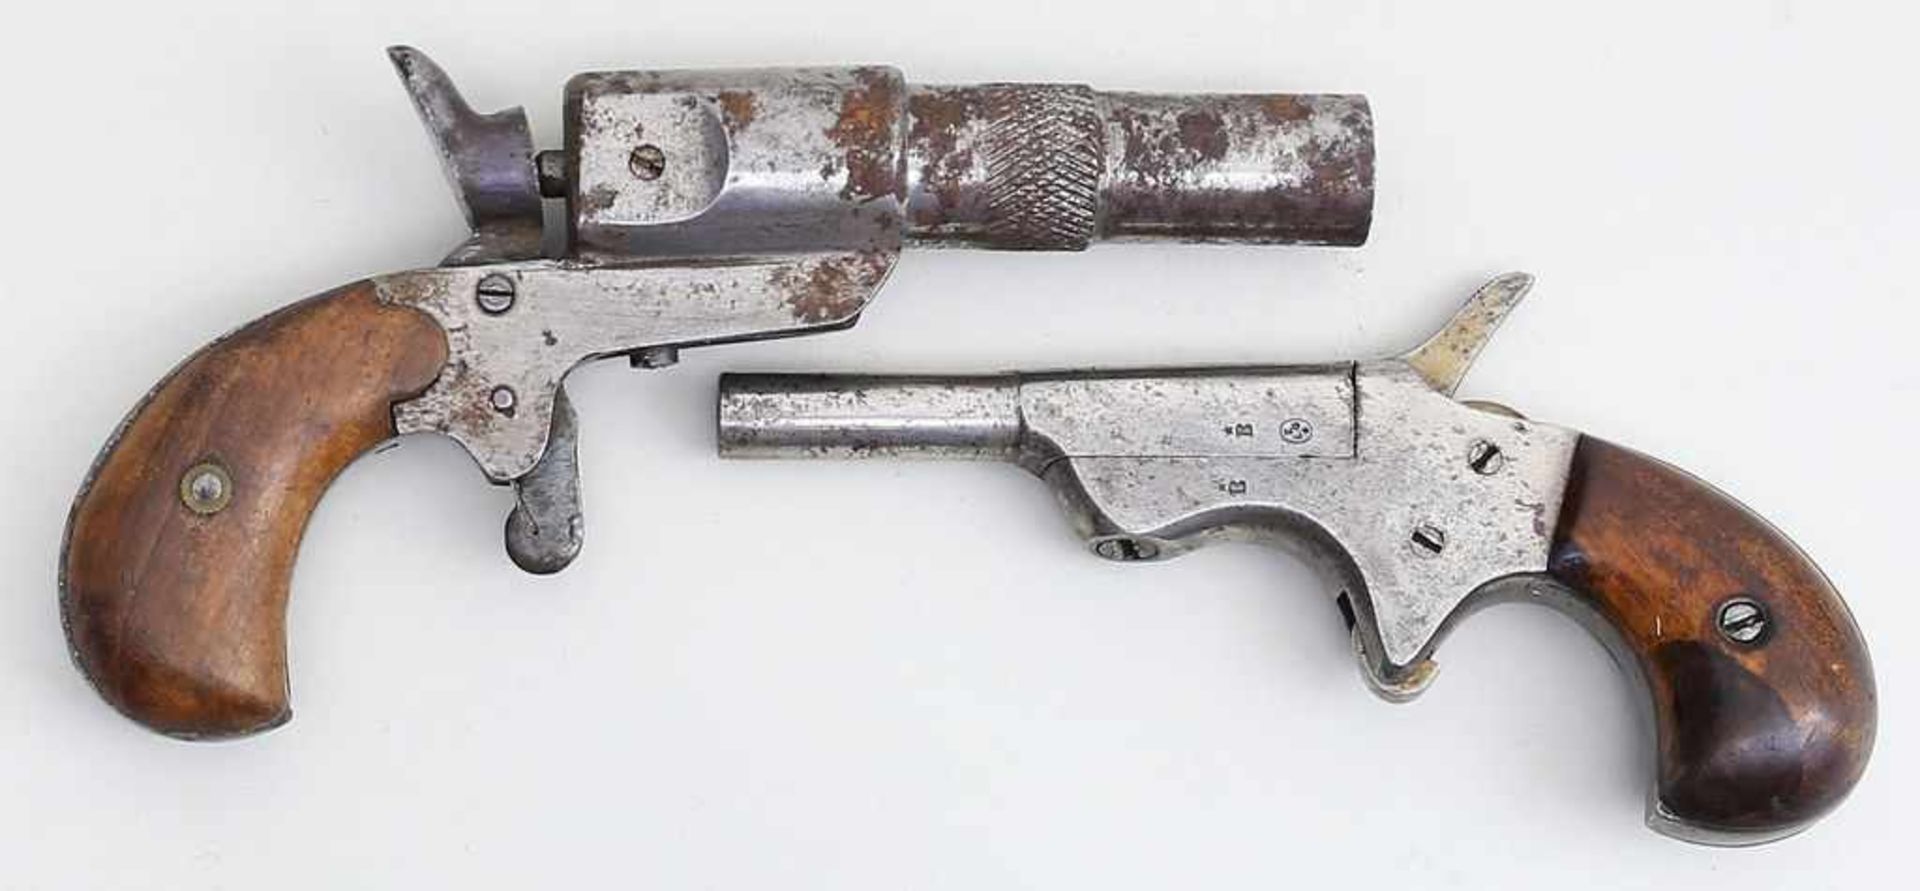 2 Taschenpistolen, so genannte "Flobert"-Art.Eisen (rostig). Holzschaft. gem. D.RG.M., um 1900. L.